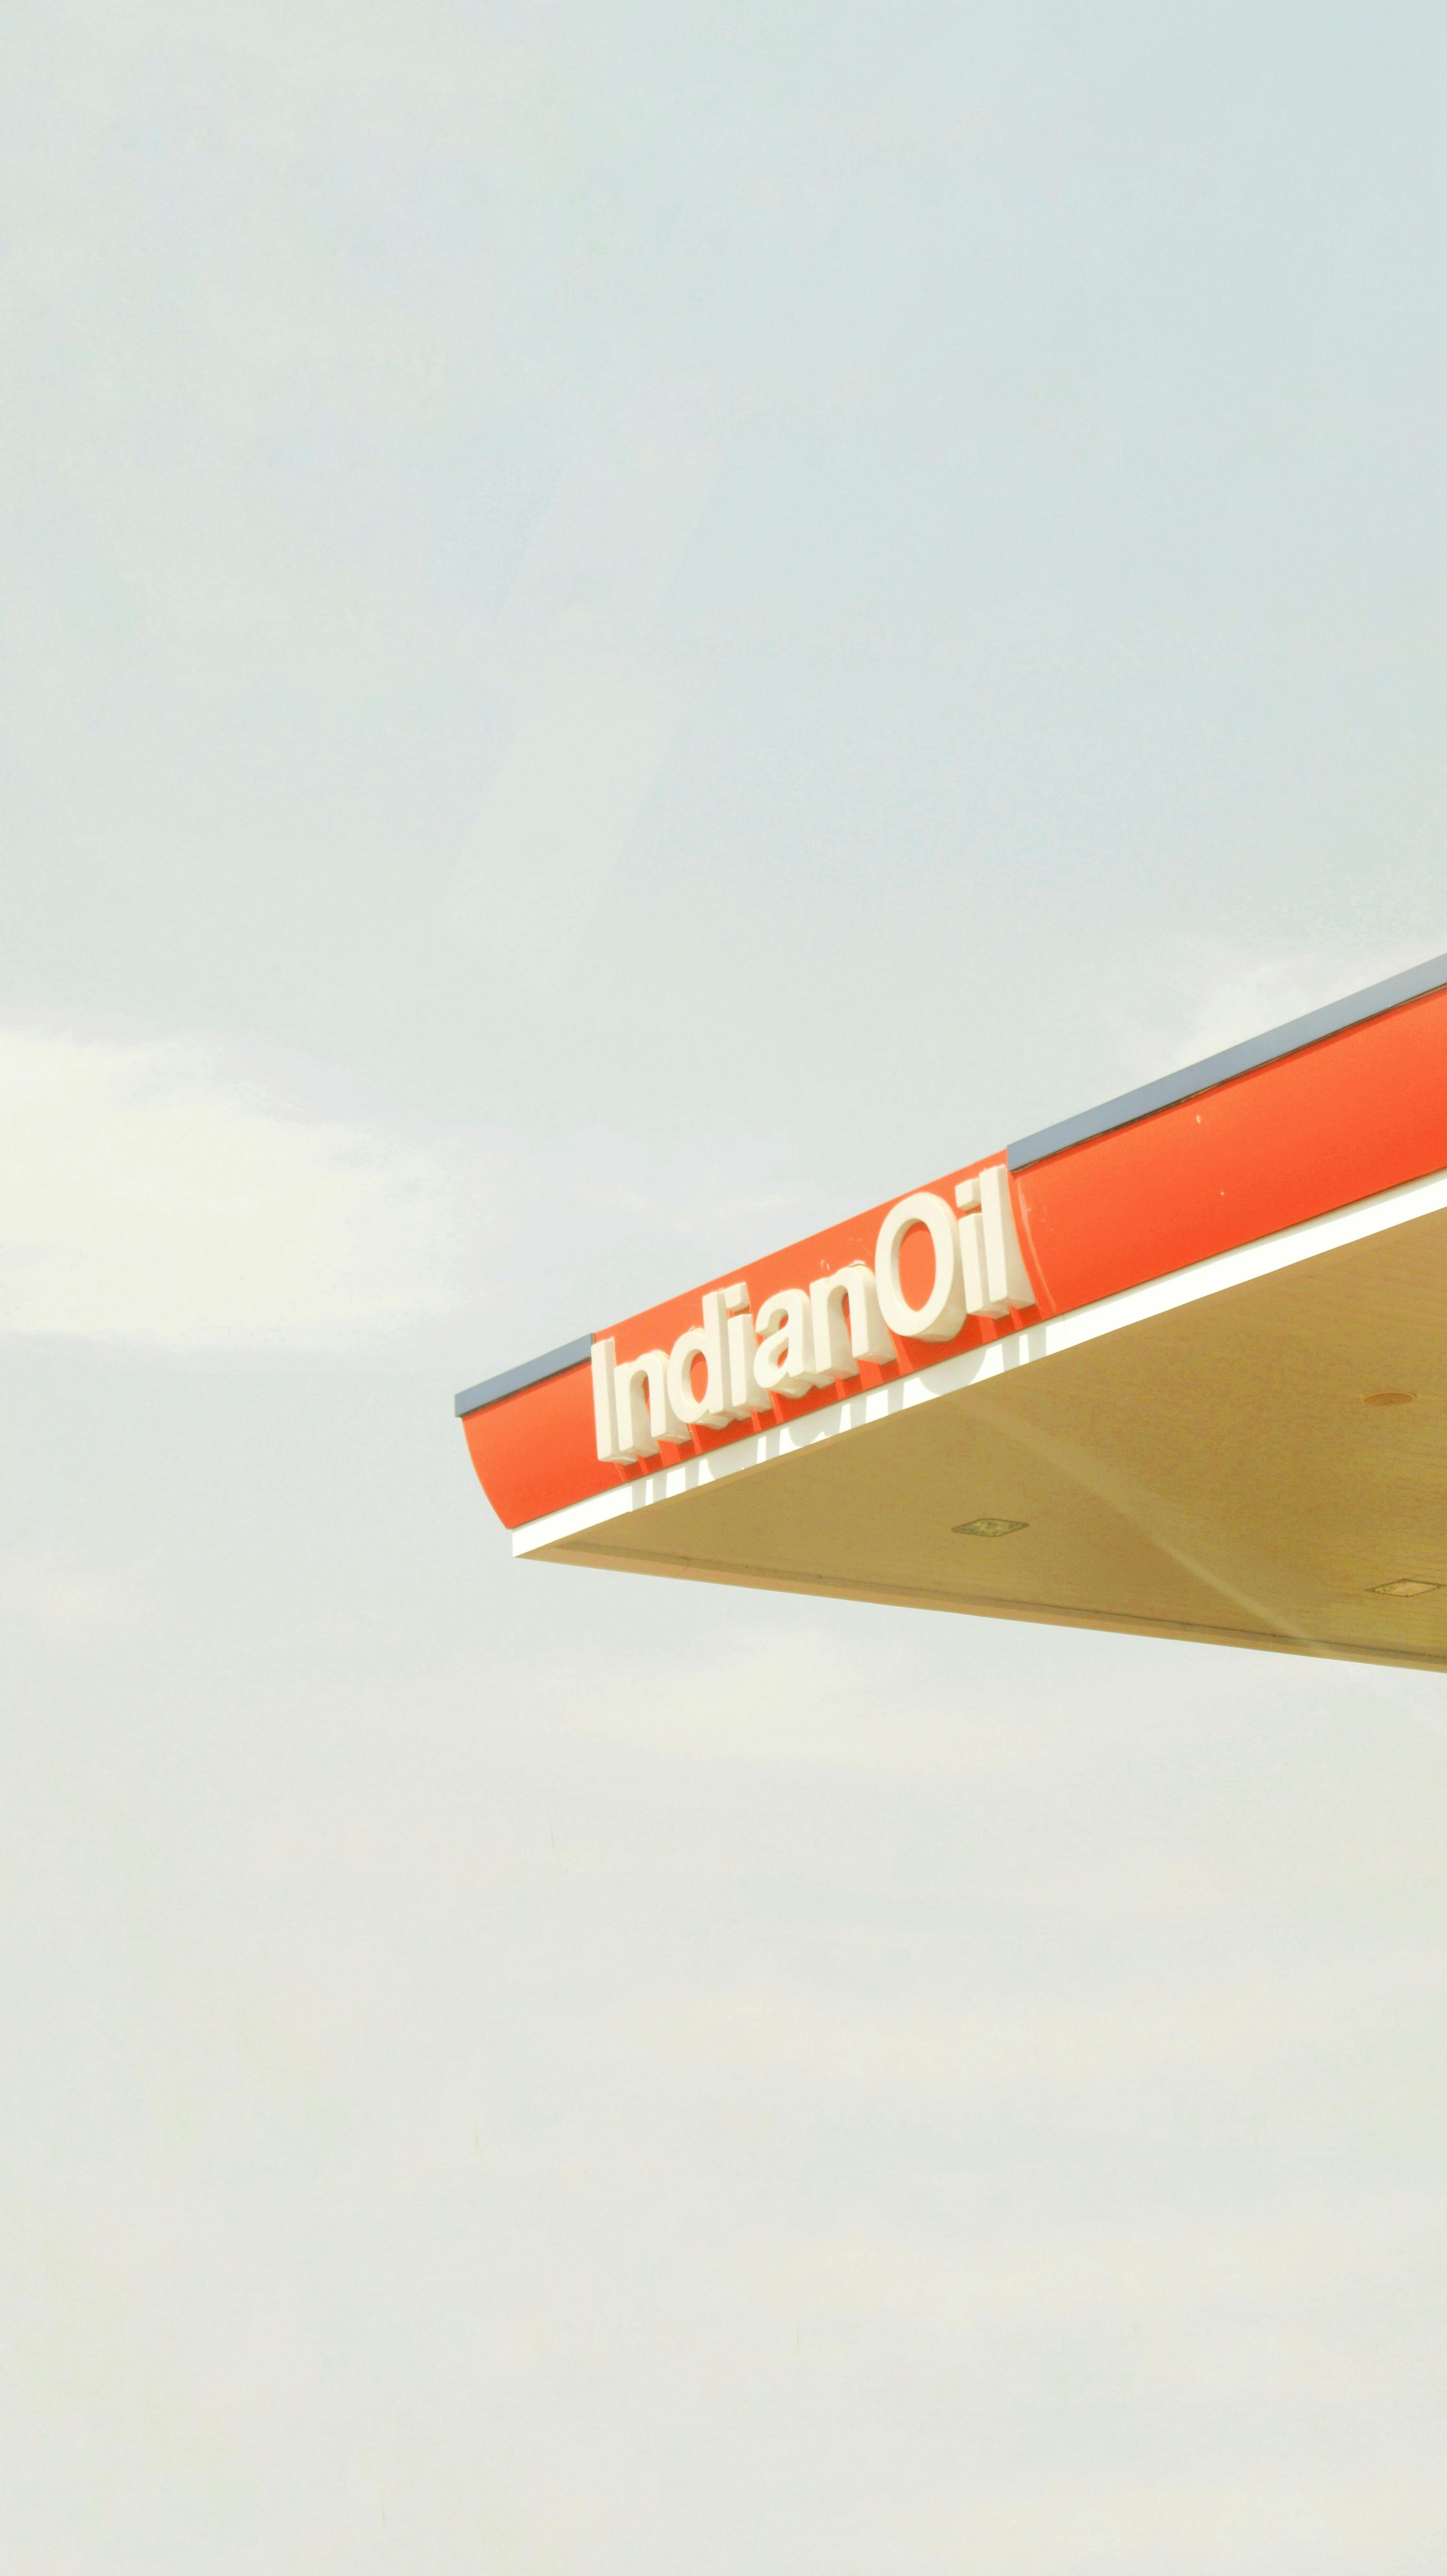 Indian-oil gas station 3D model - Download Architecture on 3DModels.org